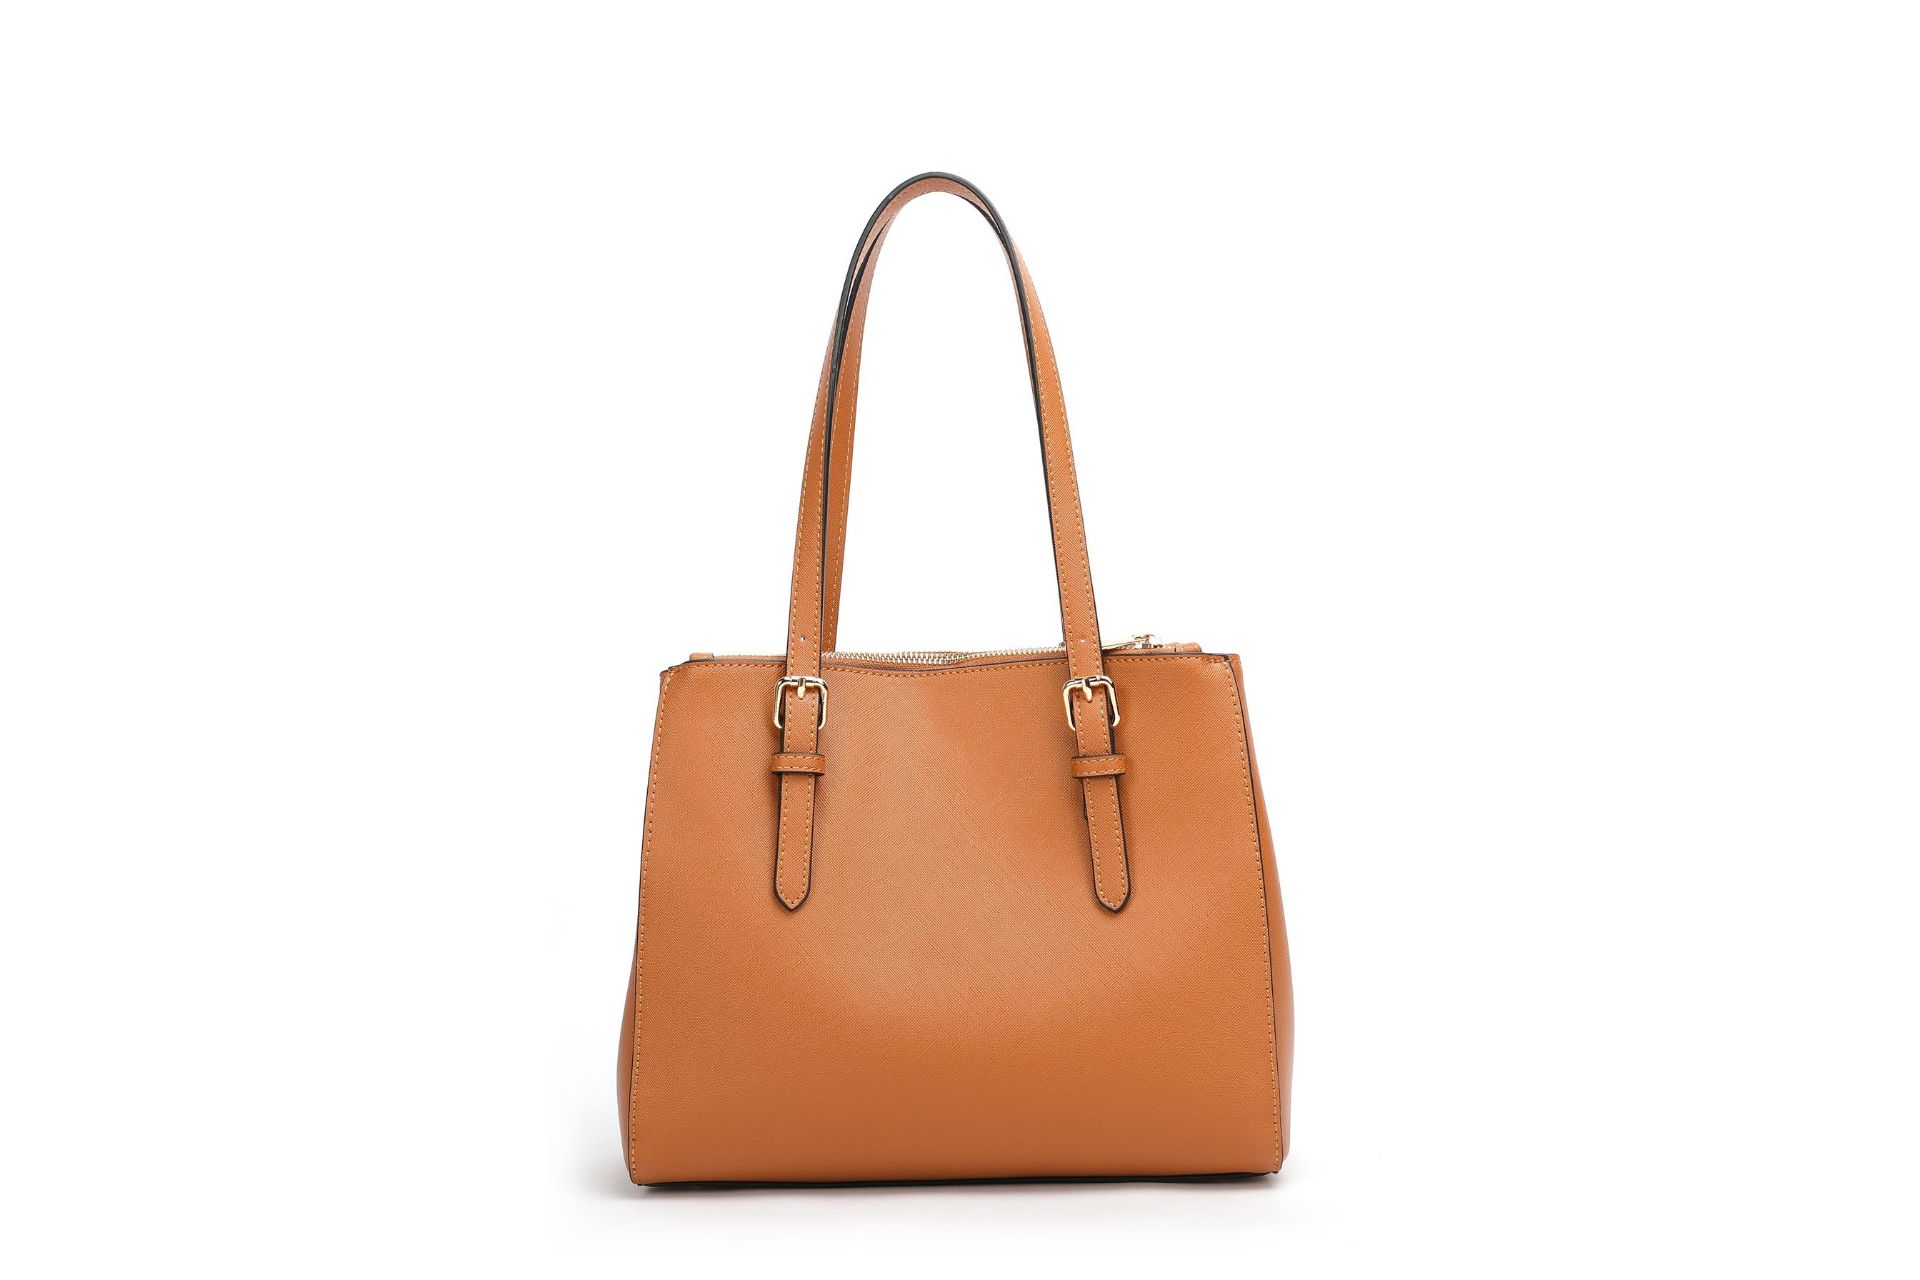 No VAT Brand New Special Edition Katy Elizabeth London Brown Medium Tote Bag With Detachable - Image 6 of 6